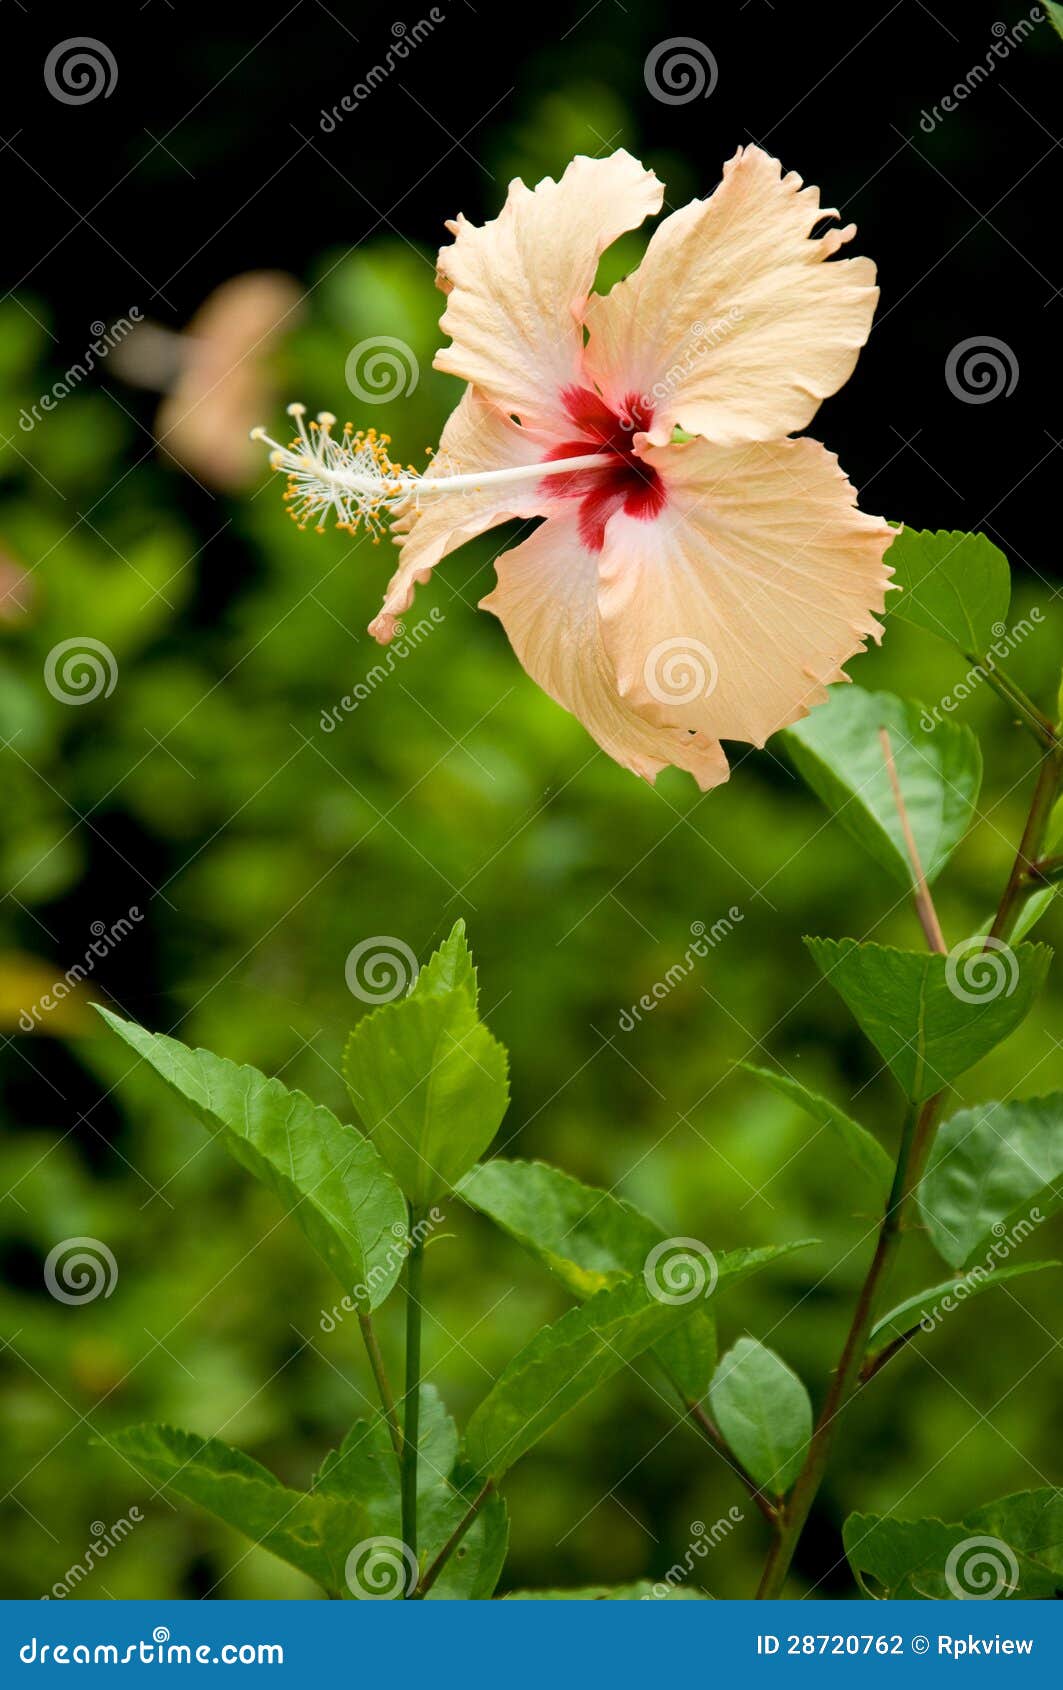 chaba, hibiscus flower